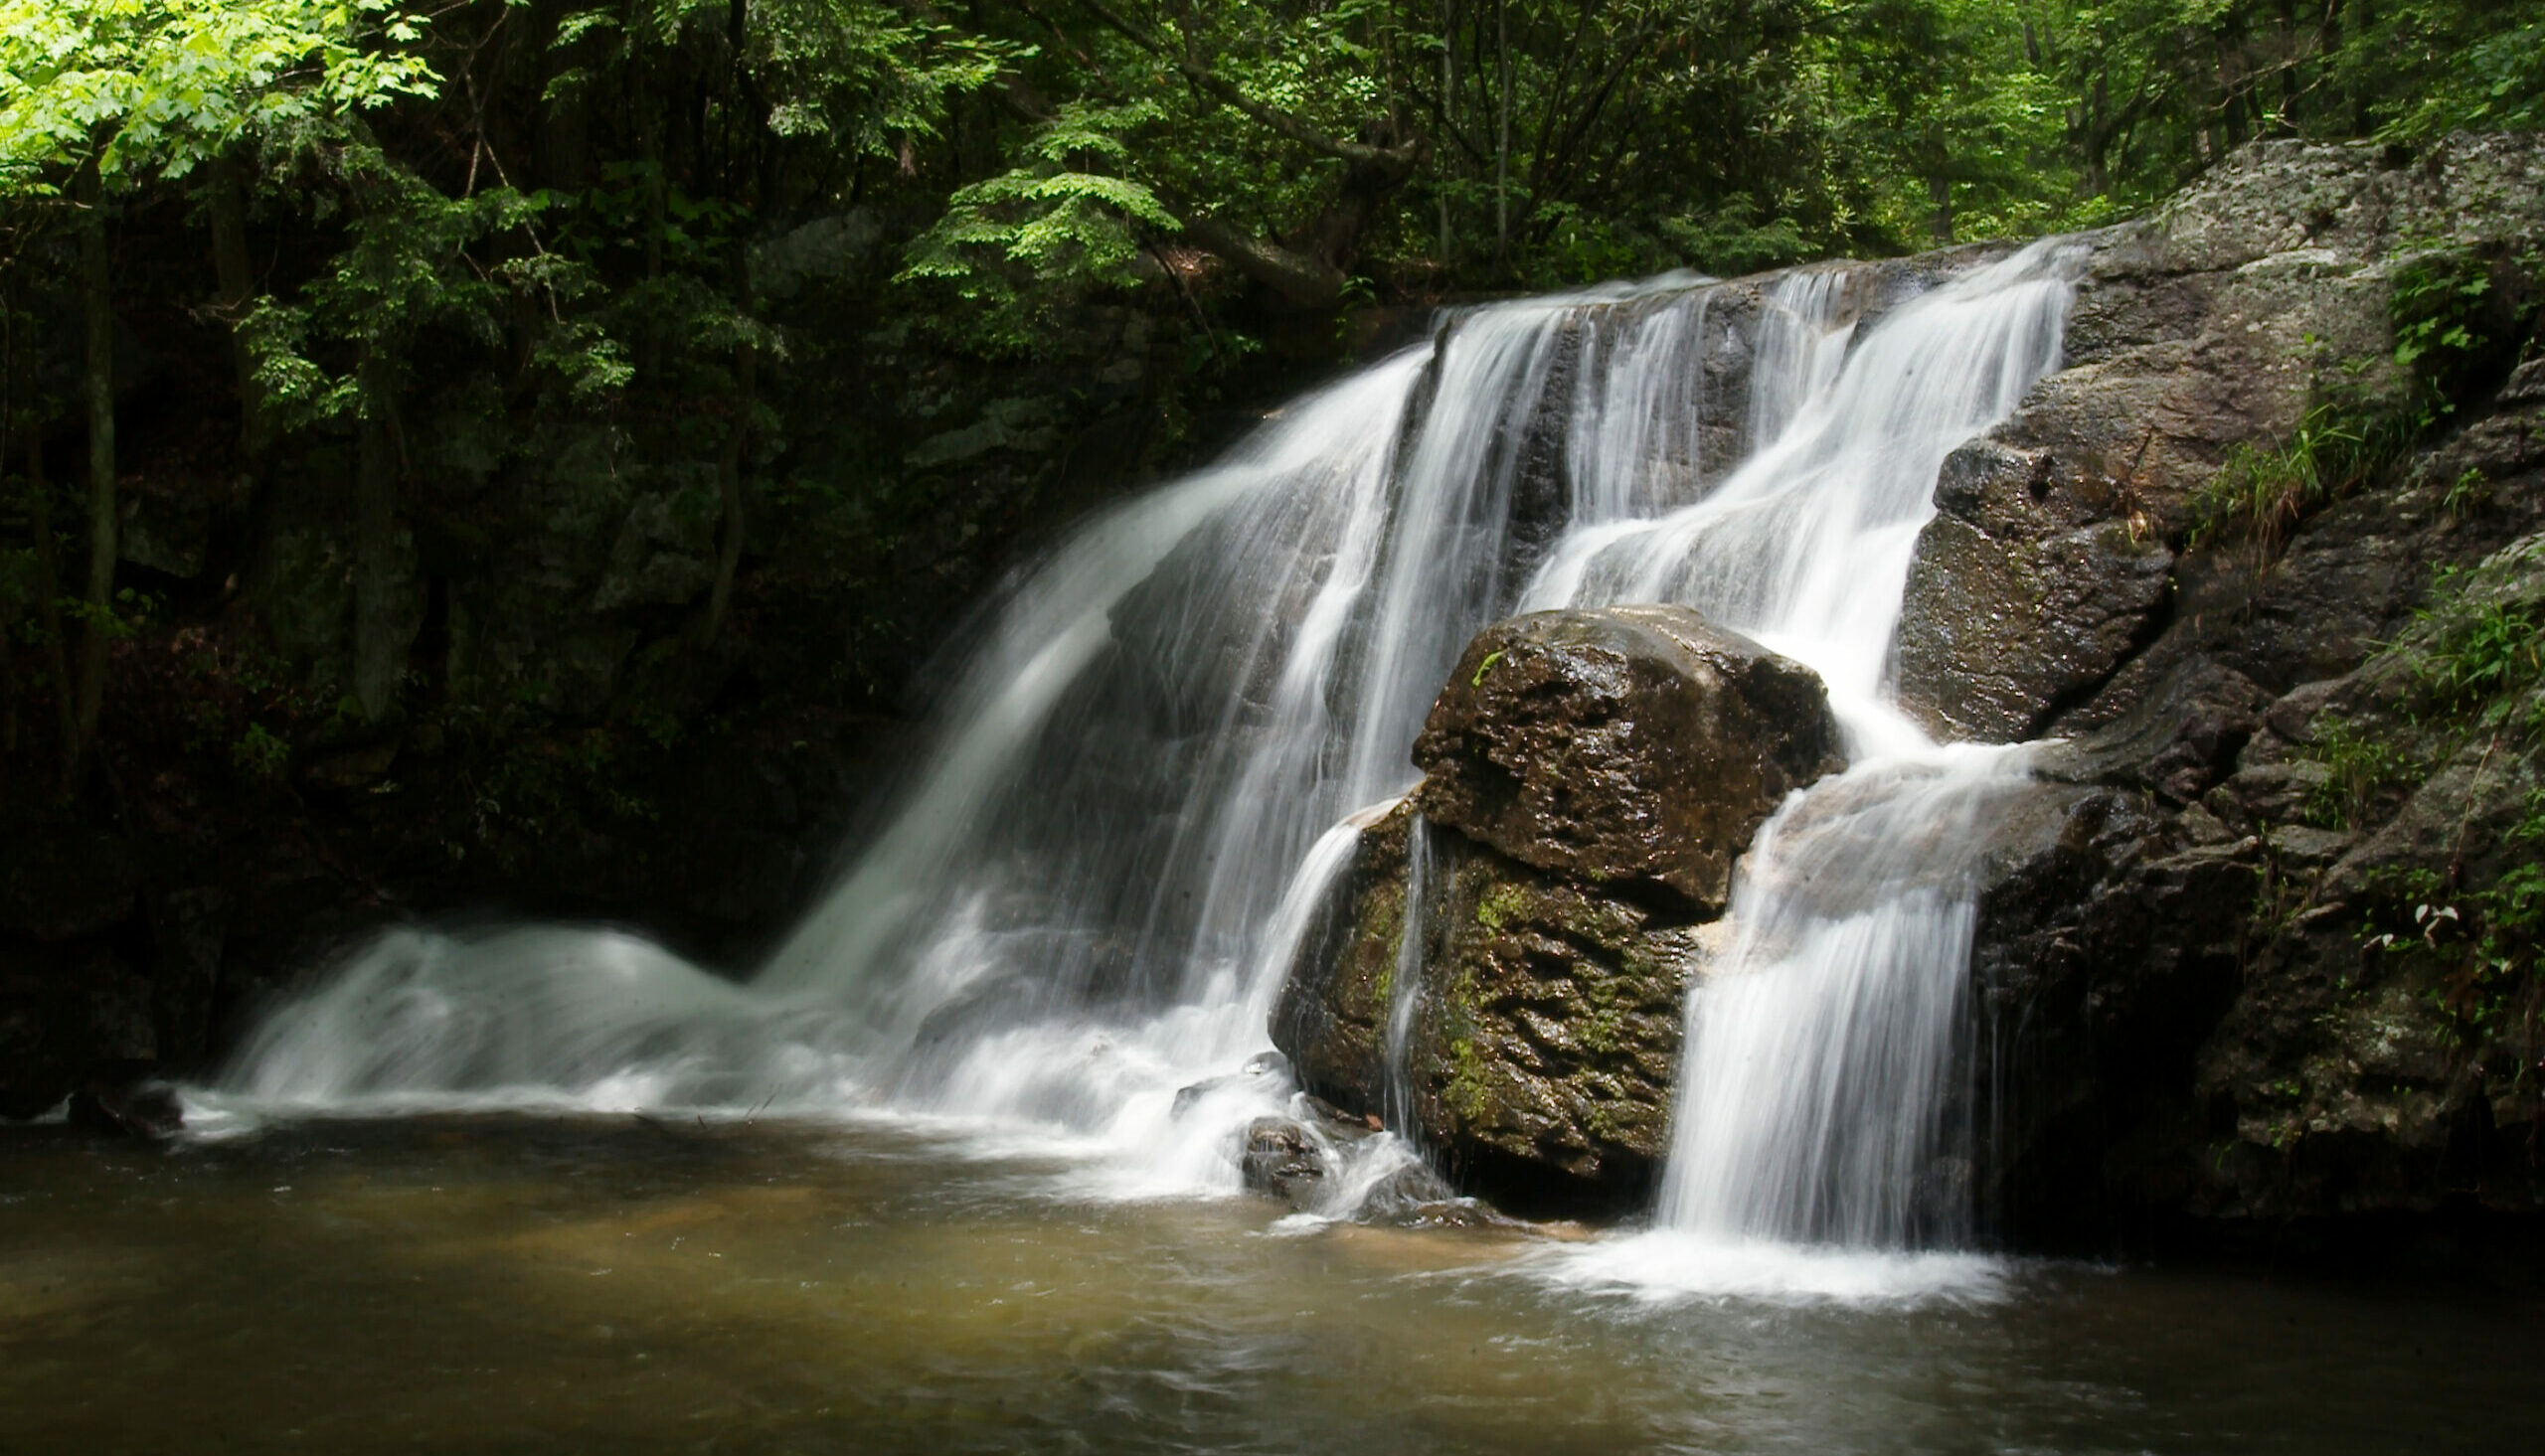 Serene waterfalls are everywhere in western North Carolina